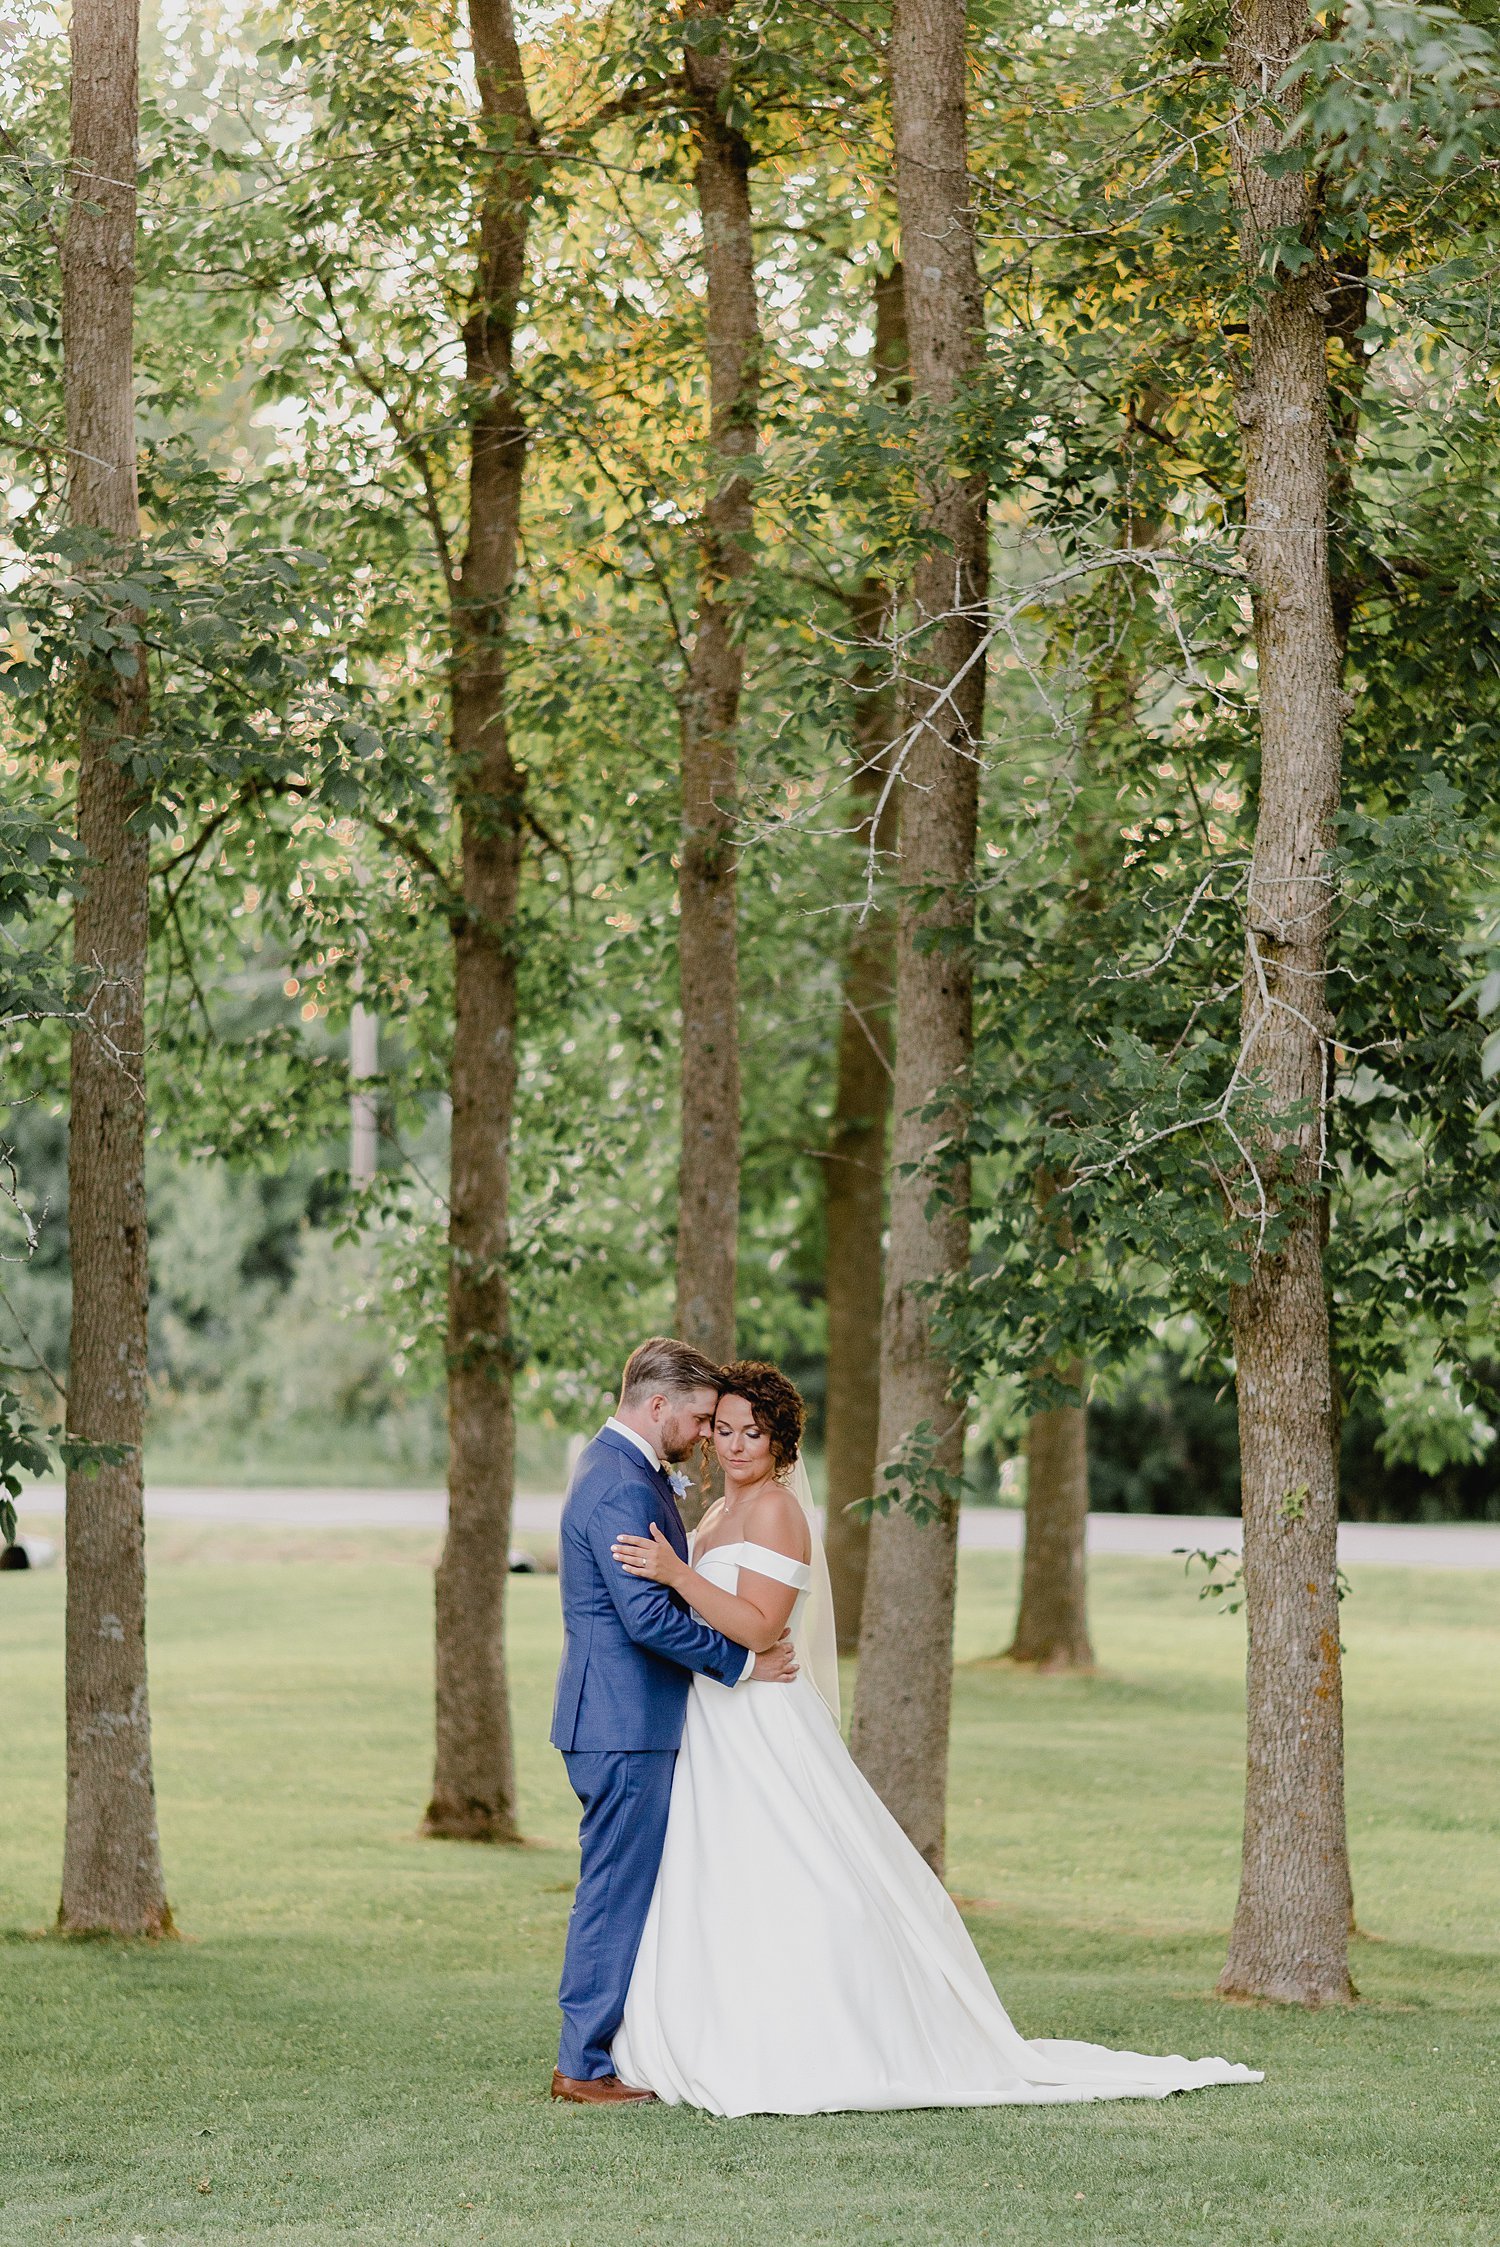 Elegant Summer Backyard Tented Wedding in Sydenham, Ontario | Prince Edward County Wedding Photographer | Holly McMurter Photographs_0092.jpg